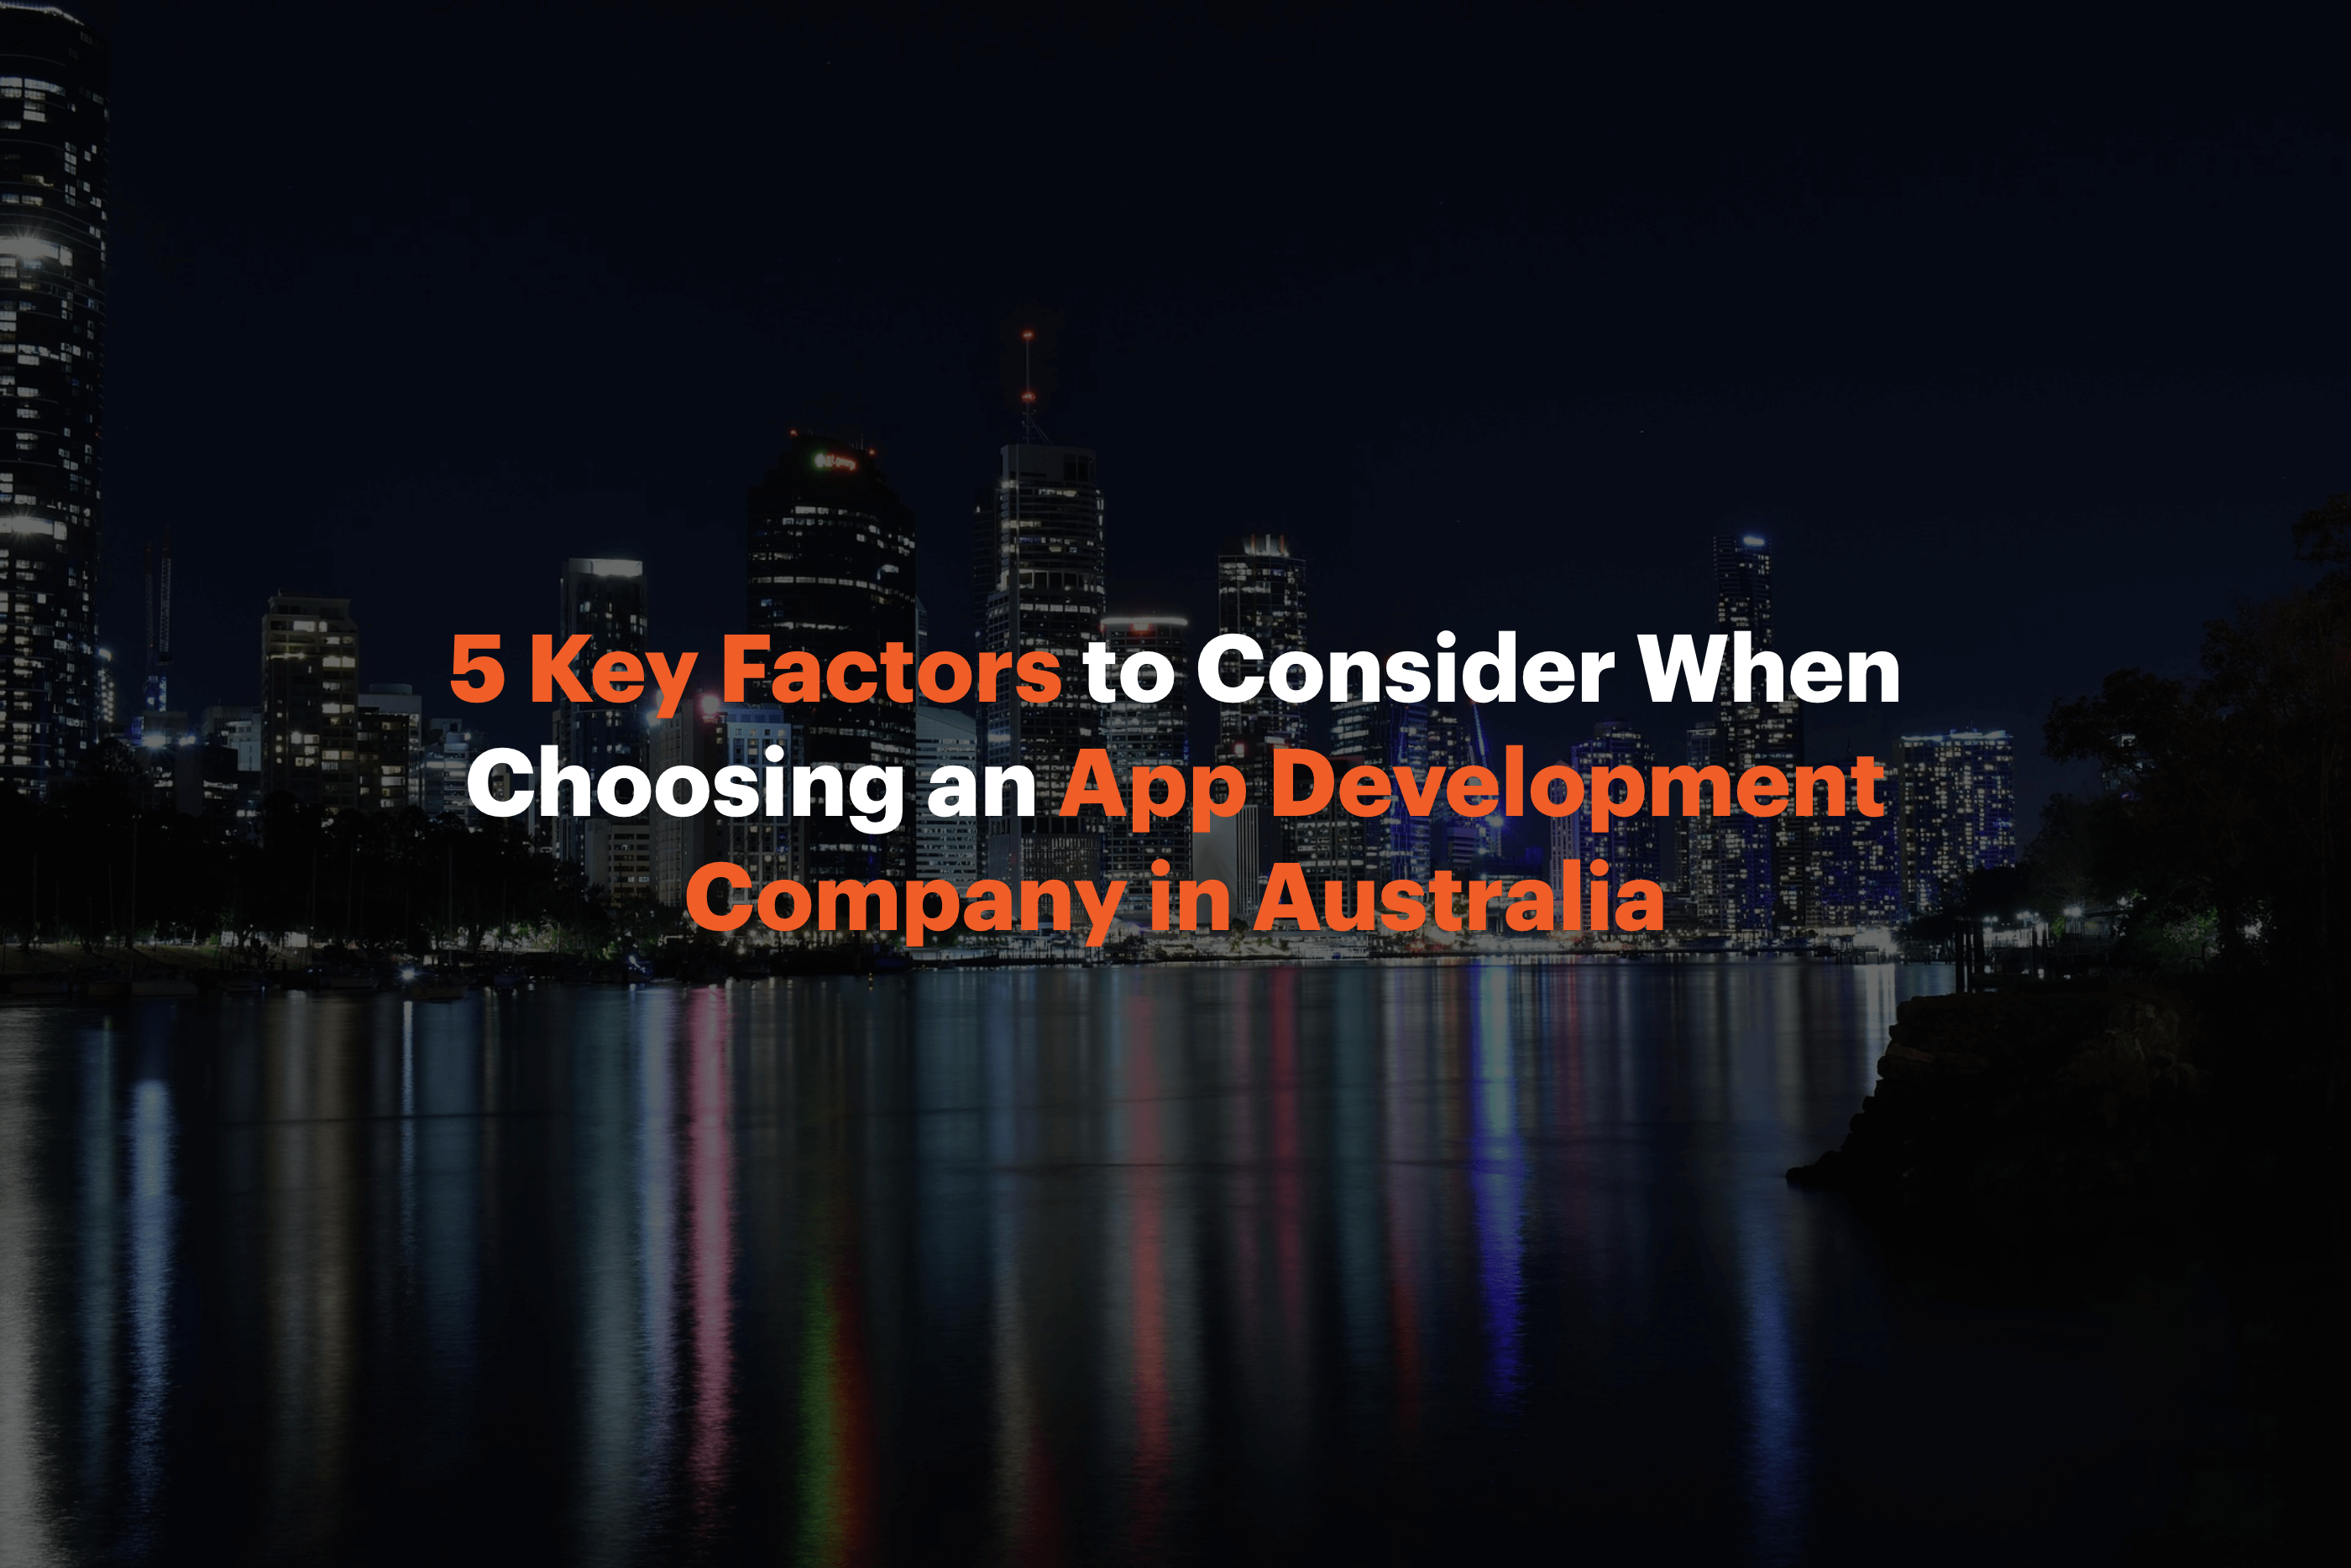 5 Key Factors to Consider When Choosing an App Development Company in Australia